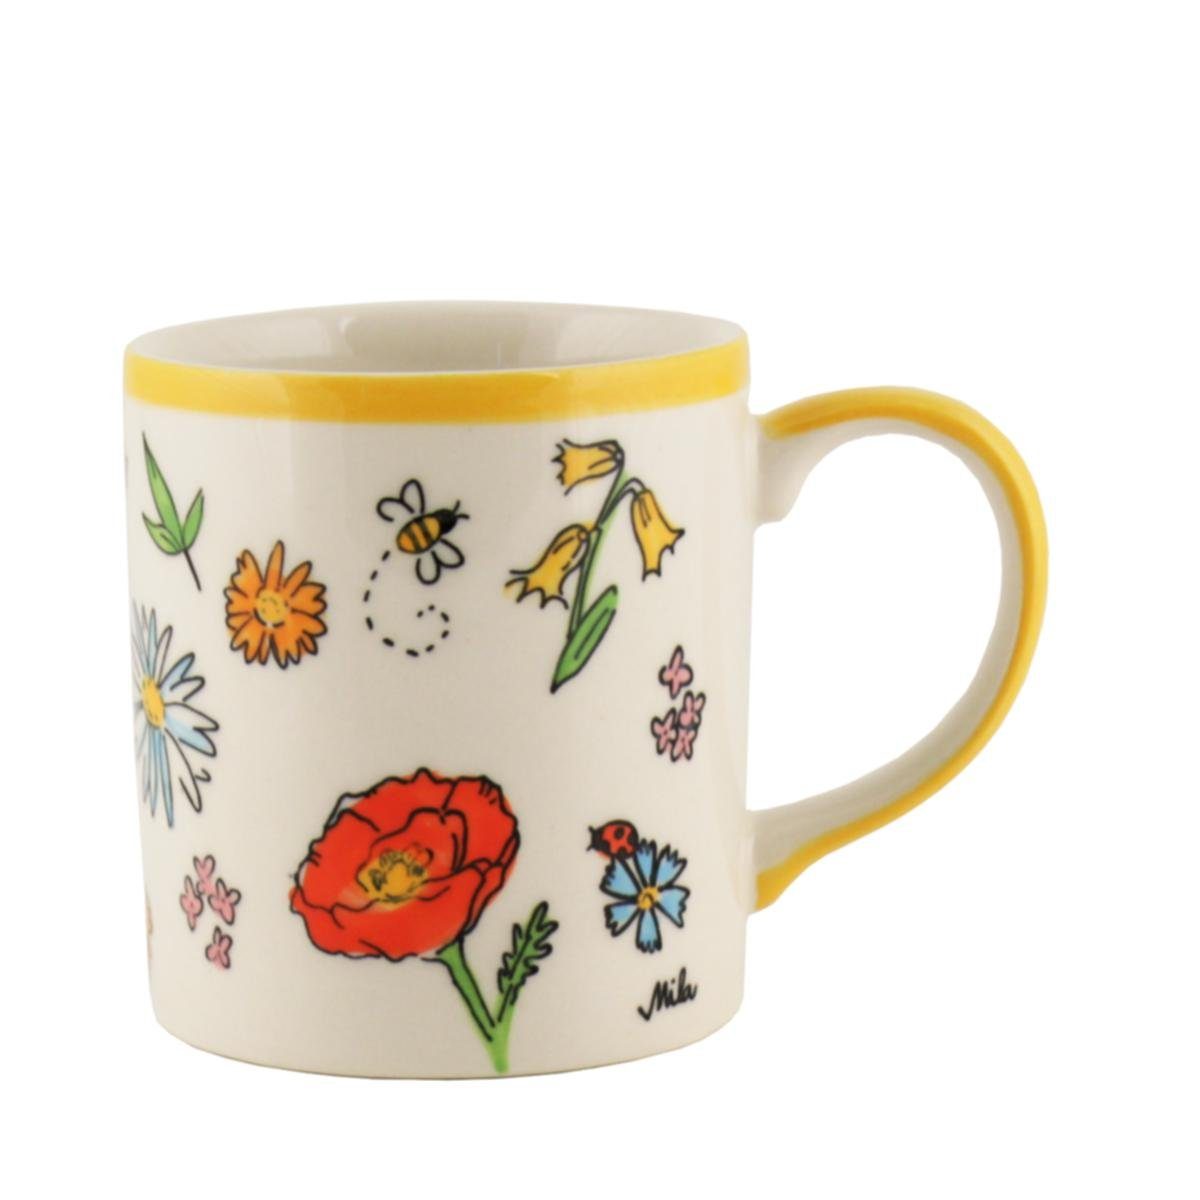 Flowers, Lovely Mila Mila Becher Keramik-Becher Keramik